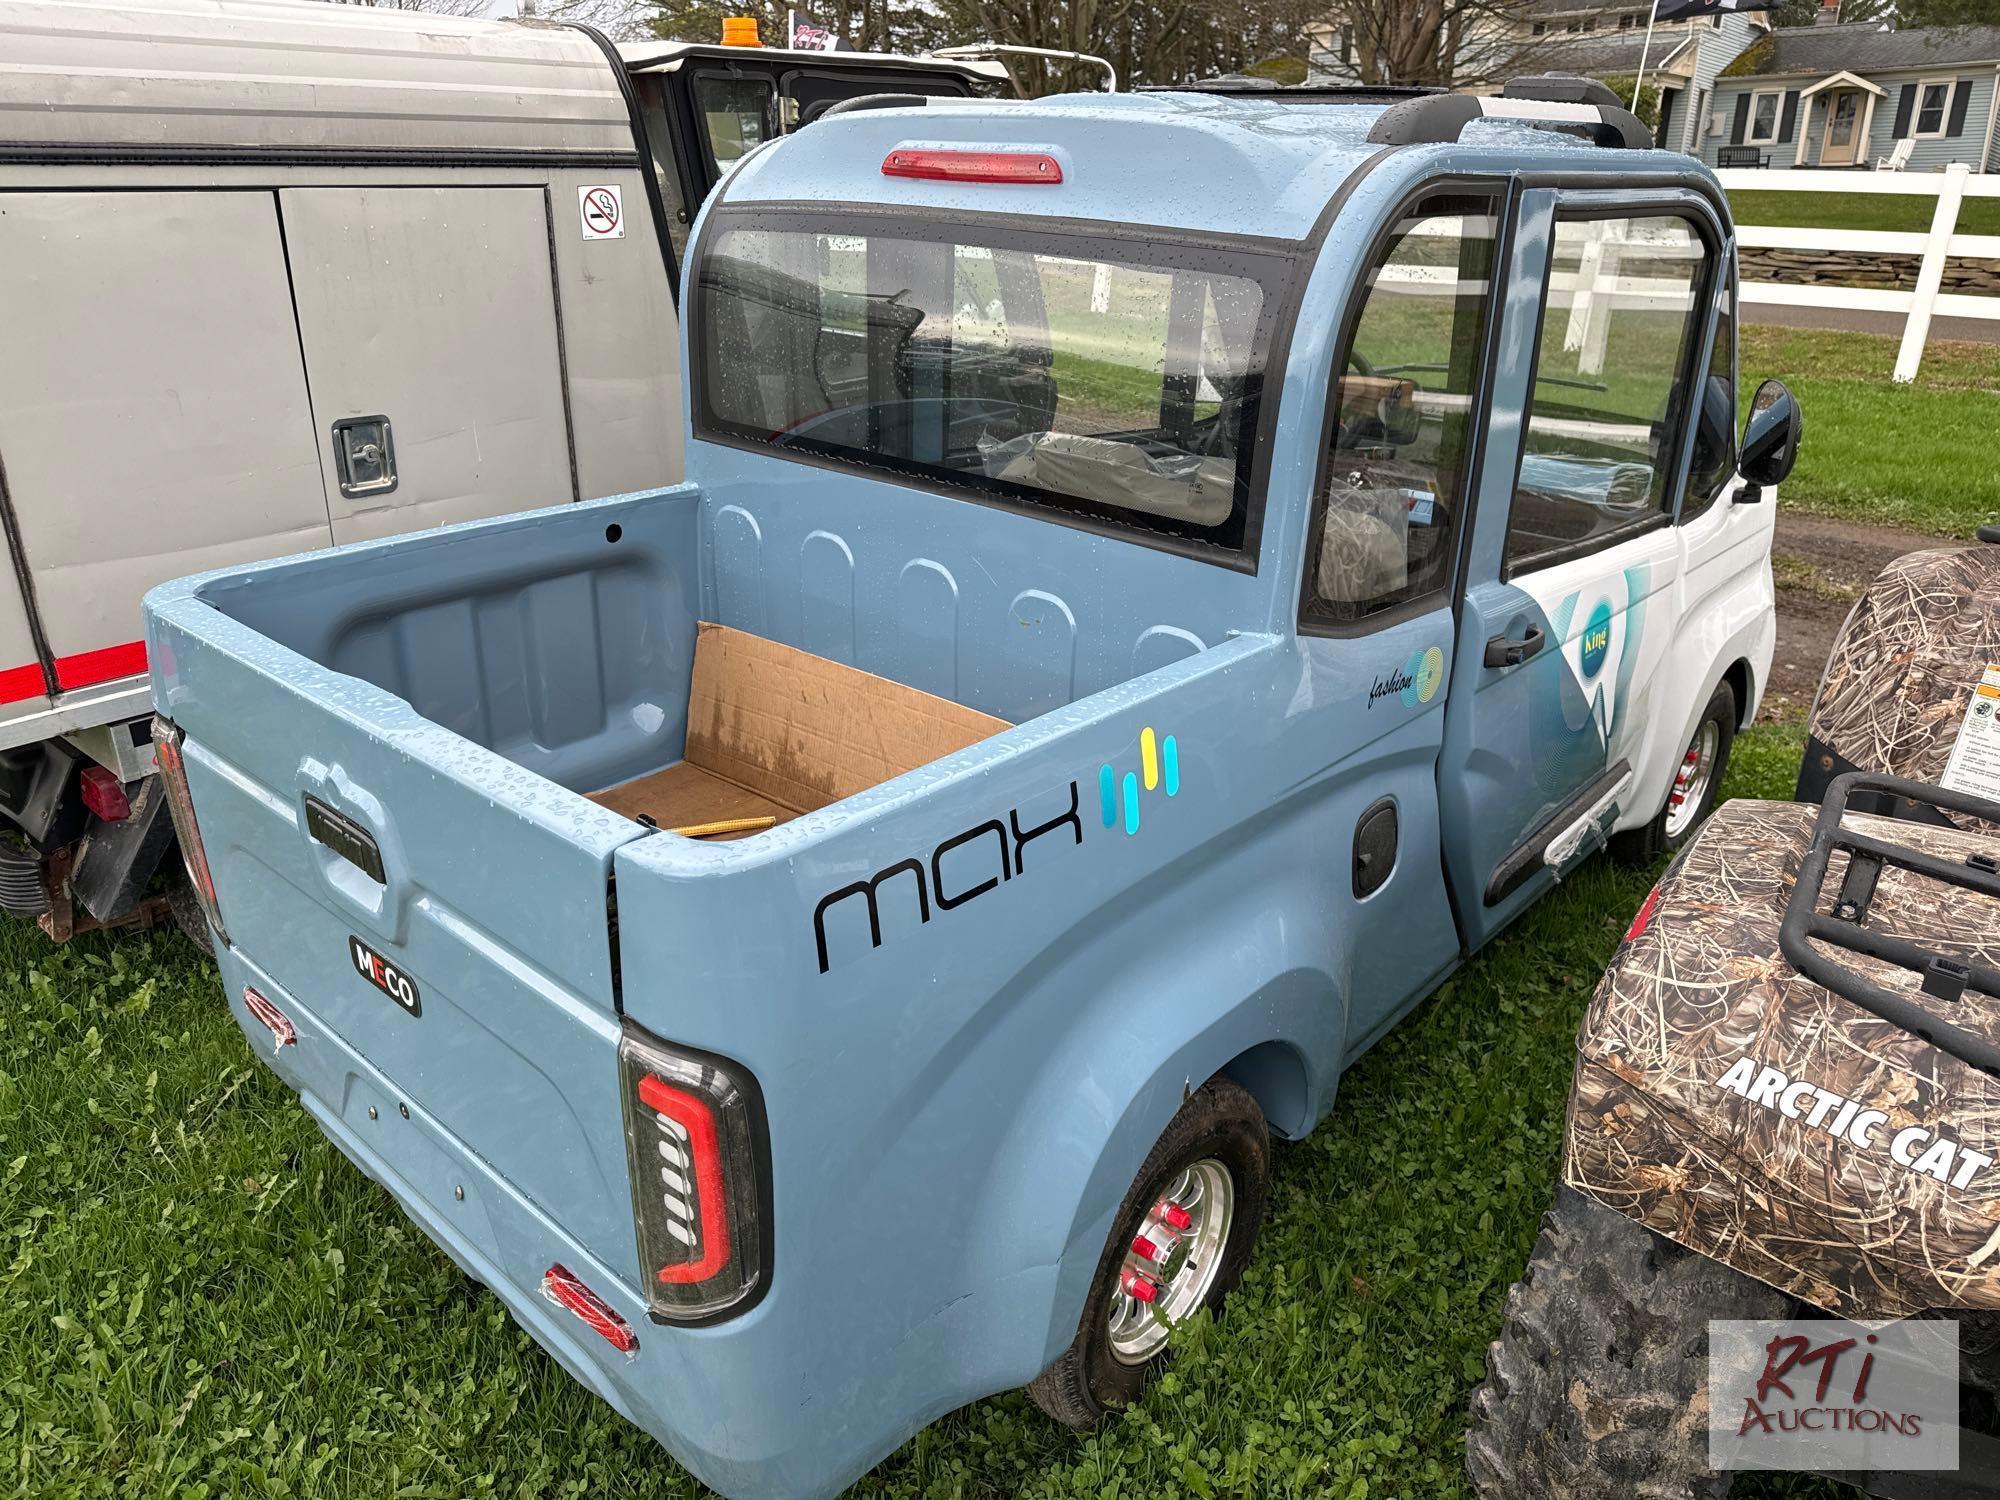 Miko T4 fashion vehicle, 4 passenger, electric, no title